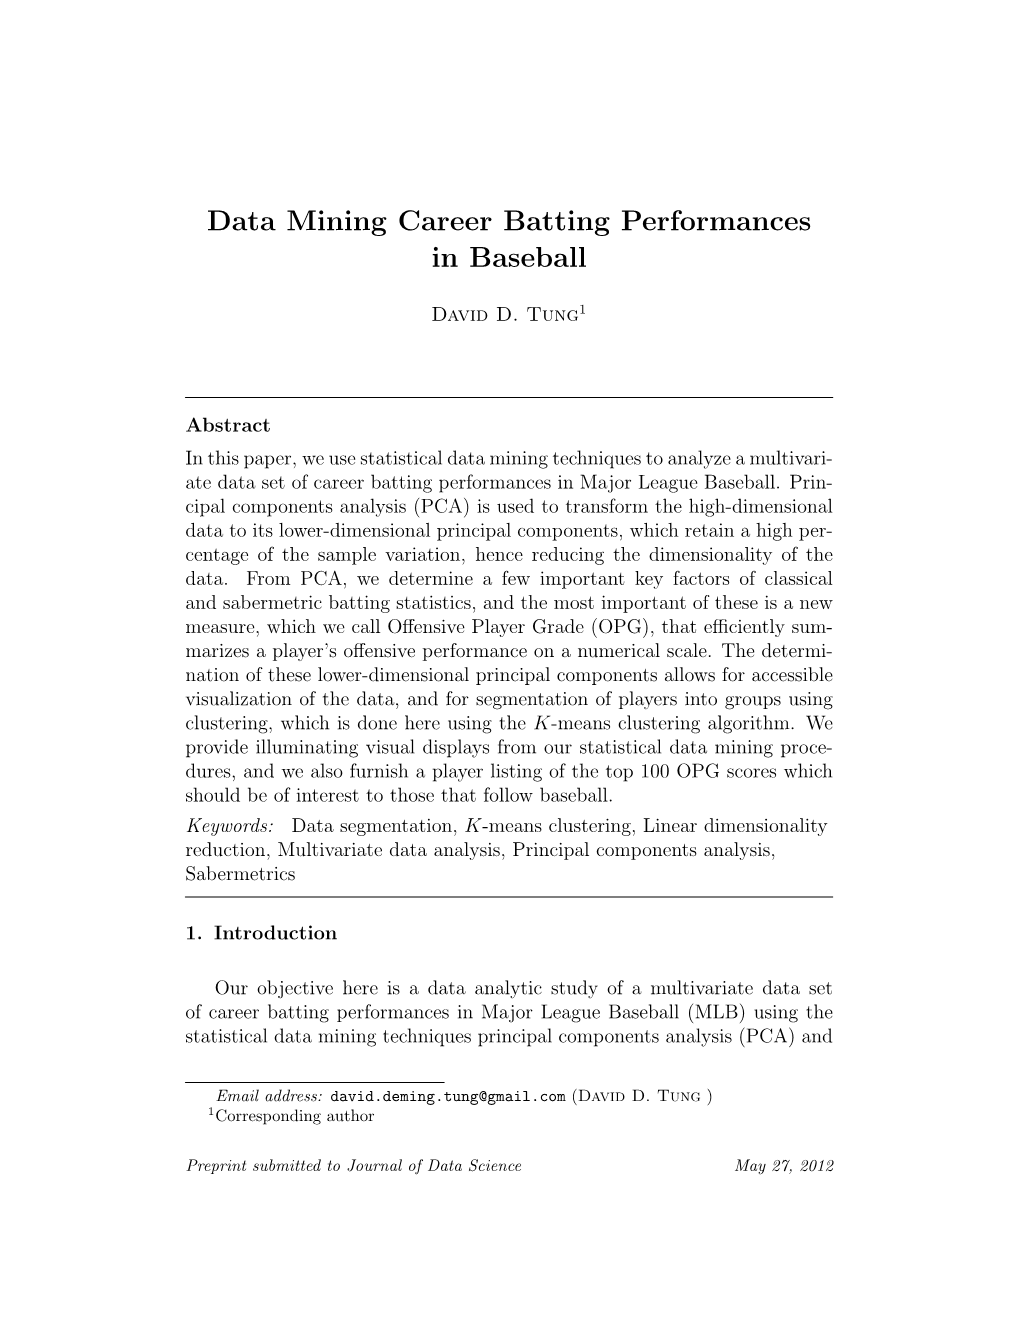 Data Mining Career Batting Performances in Baseball